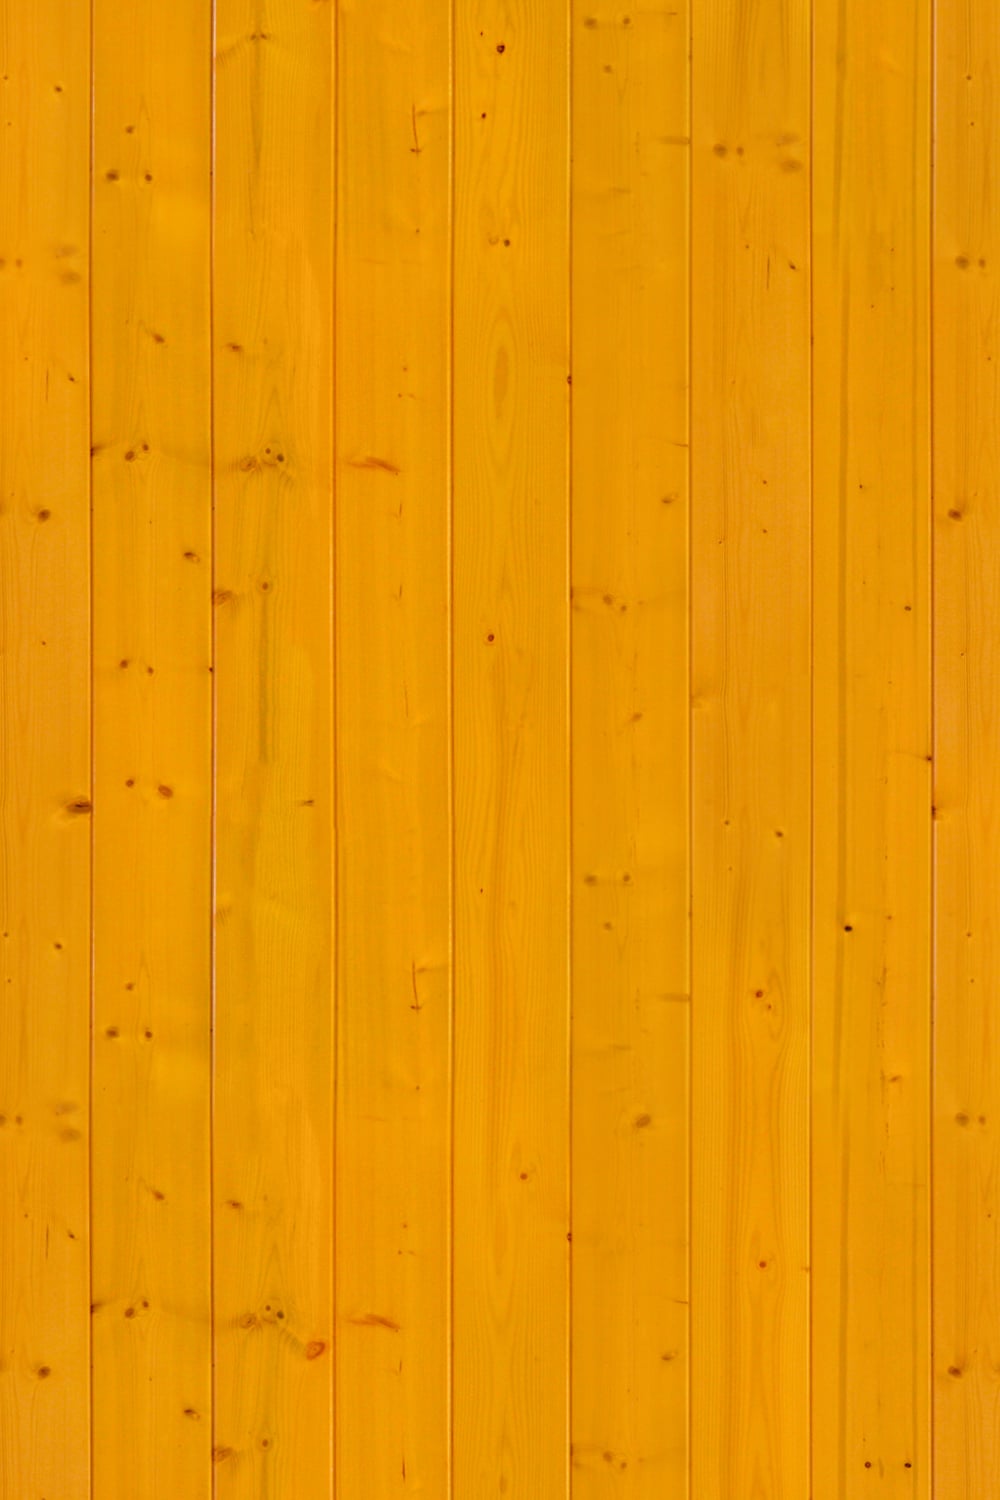 Maple light grain wooden panel flooring seamless texture close-up